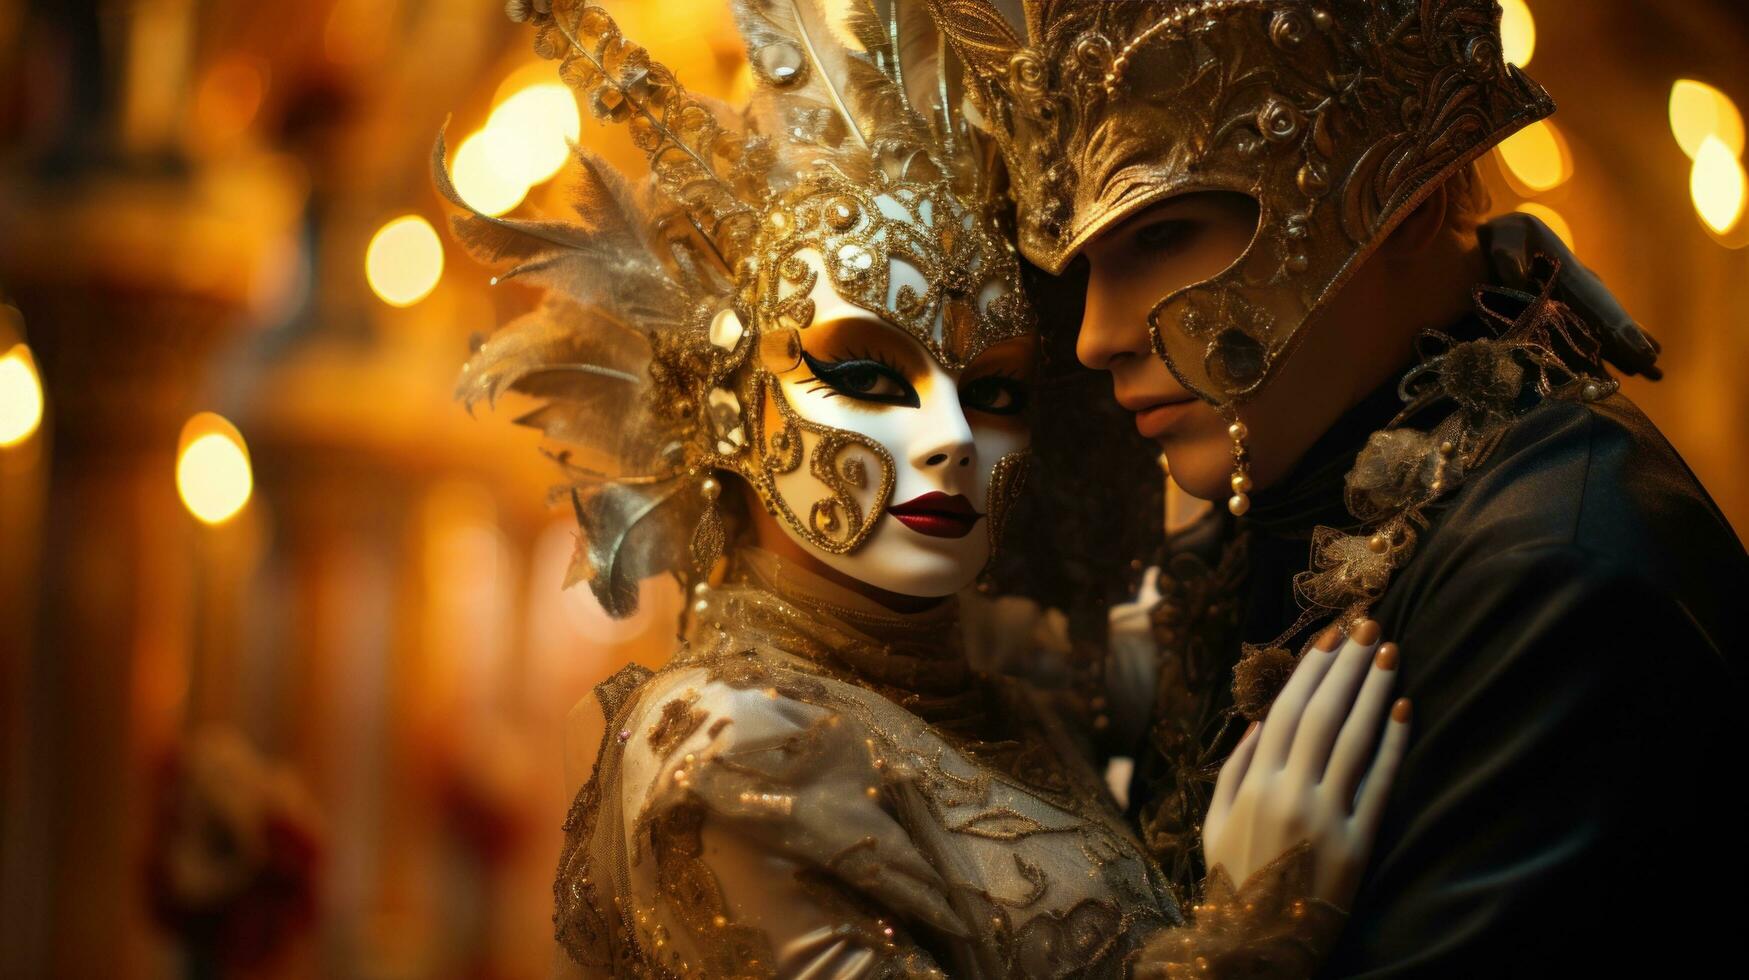 mascarada pelota a Venecia carnaval con florido mascaras y disfraces foto